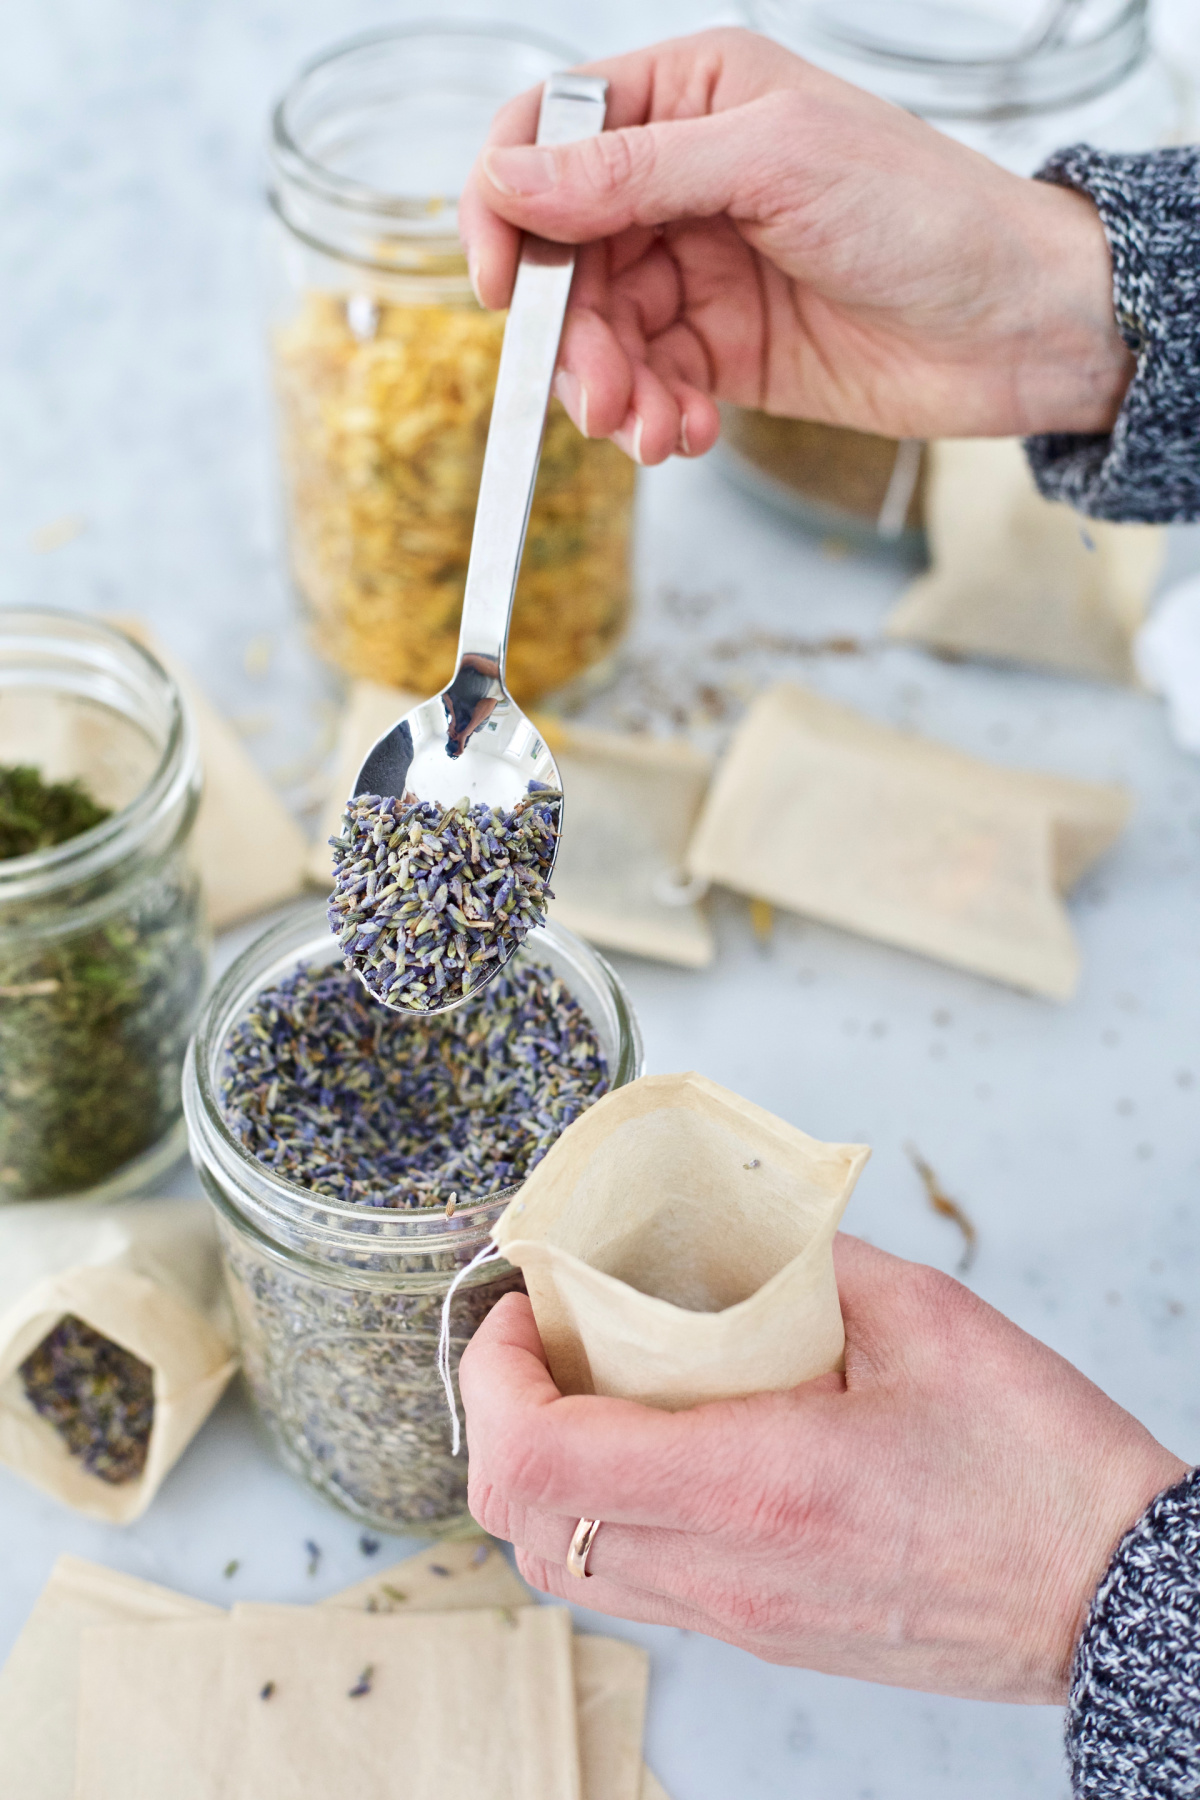 placing dried lavender into a tea bag